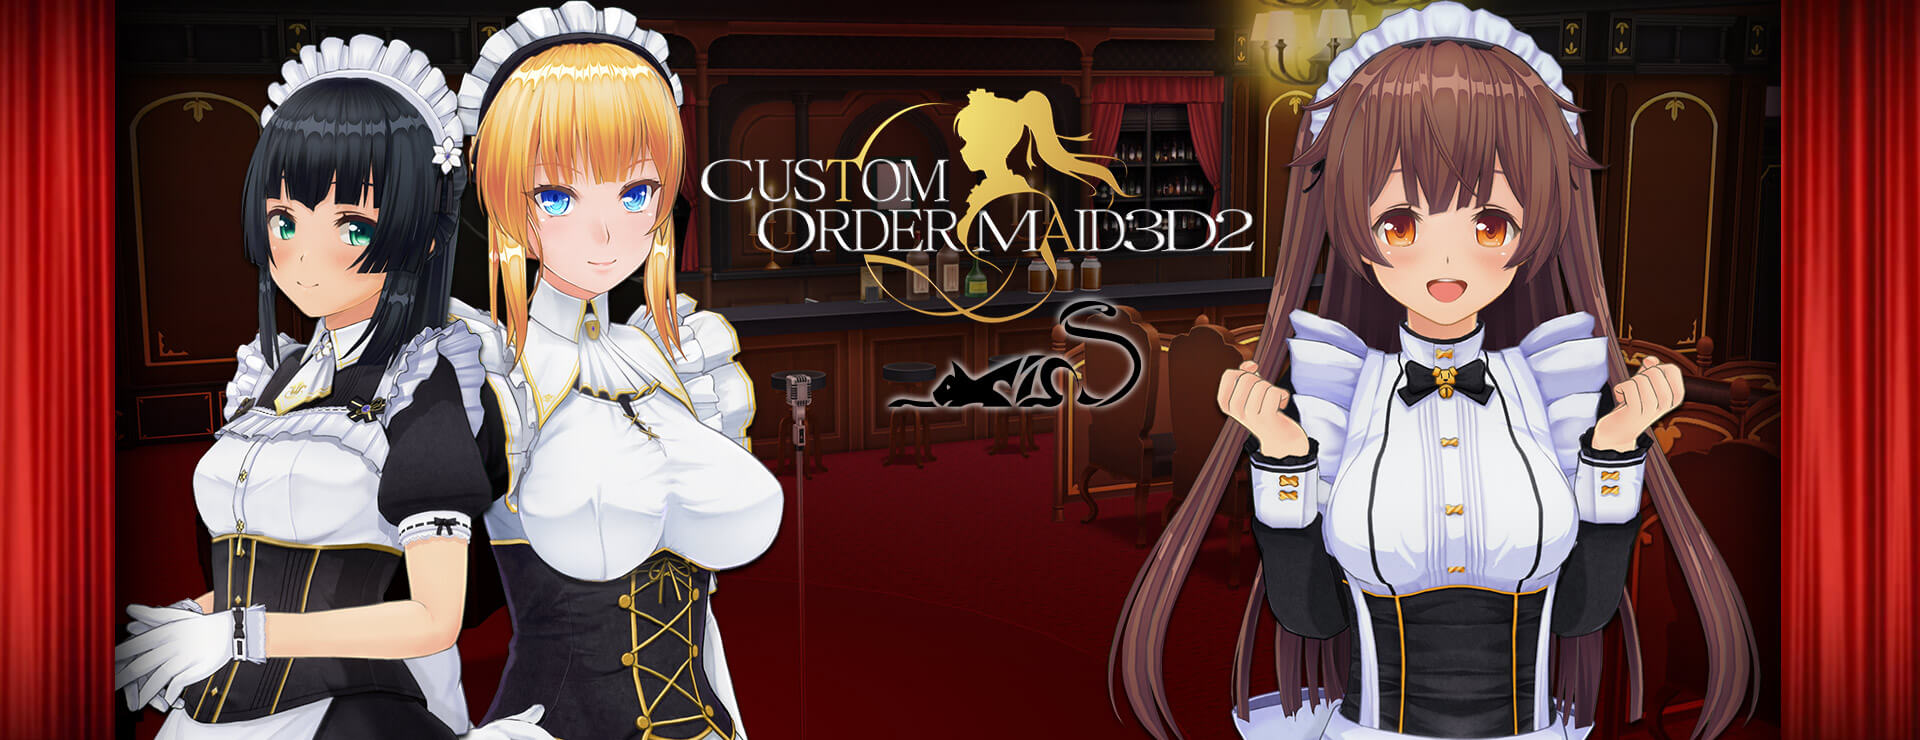 Custom Order Maid 3D2 - It's a Night Magic Premium Empire Bundle - シミュレーション ゲーム